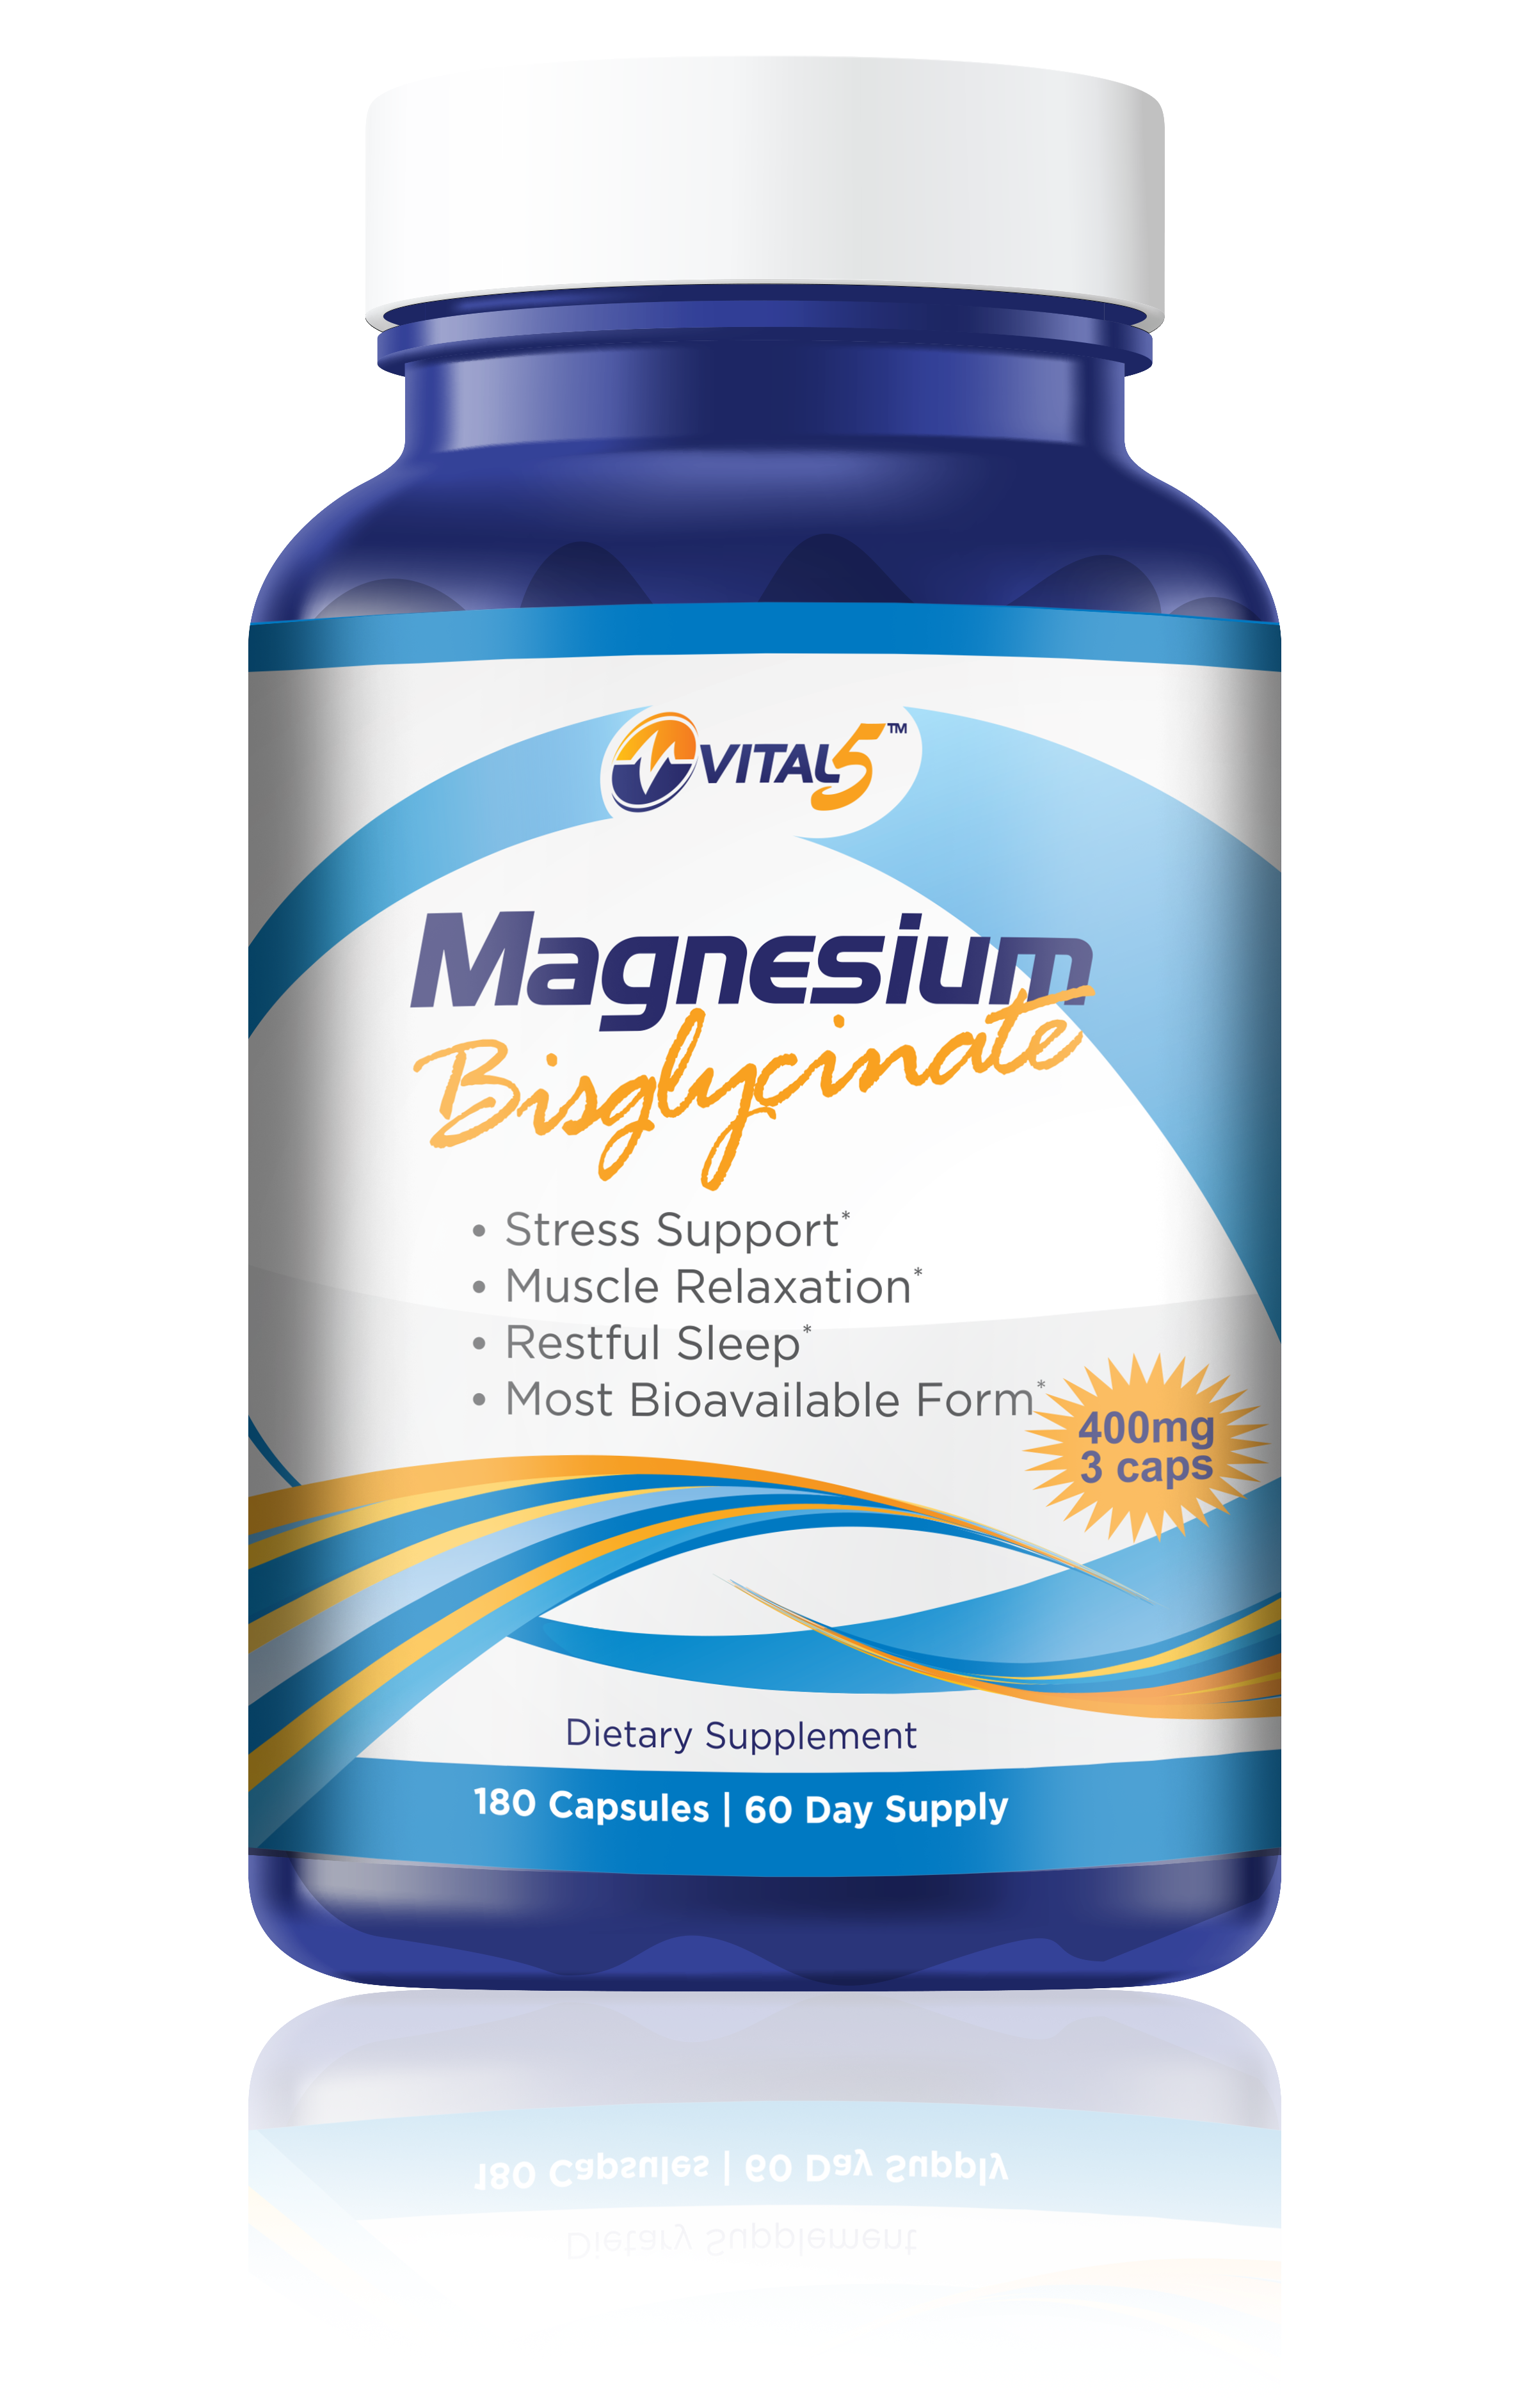 Vital 5 Magnesium Bisglycinate